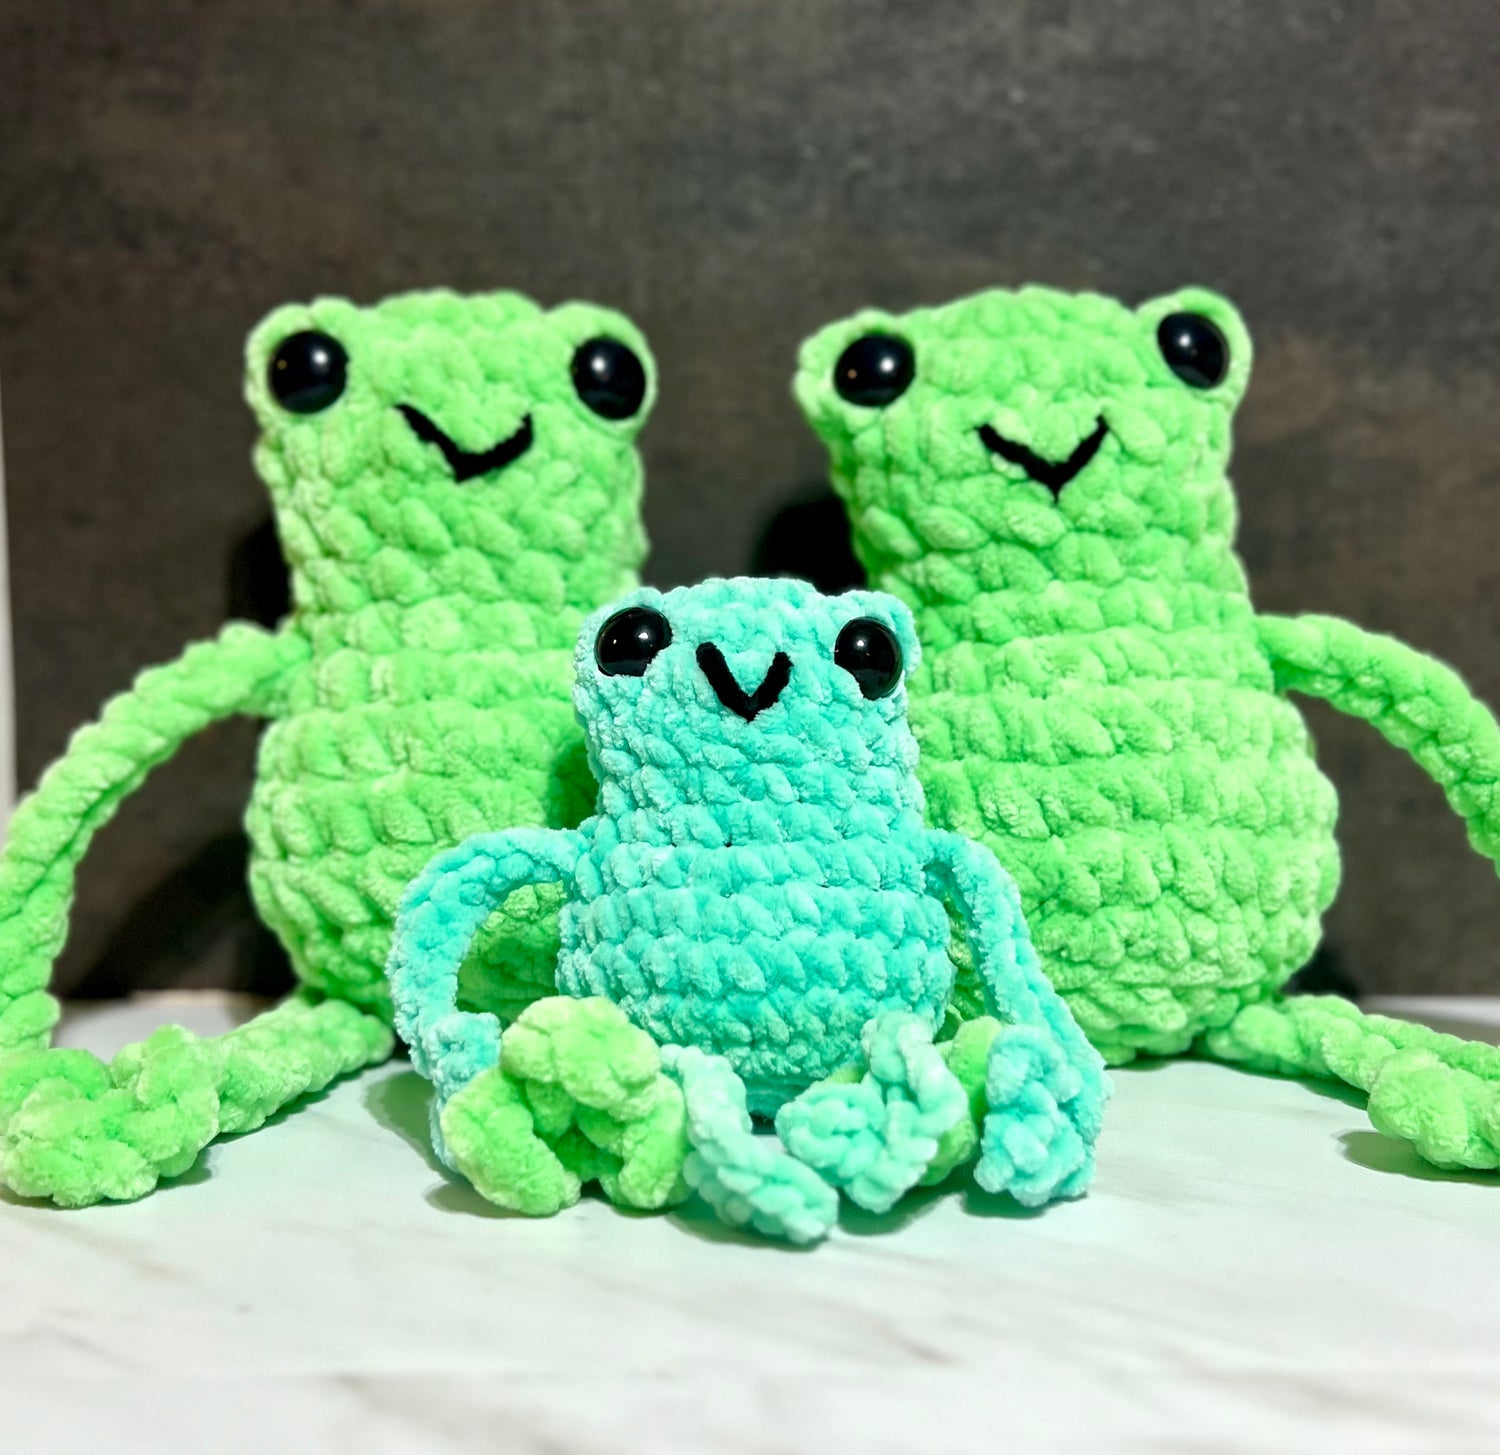 Crochet Cuties